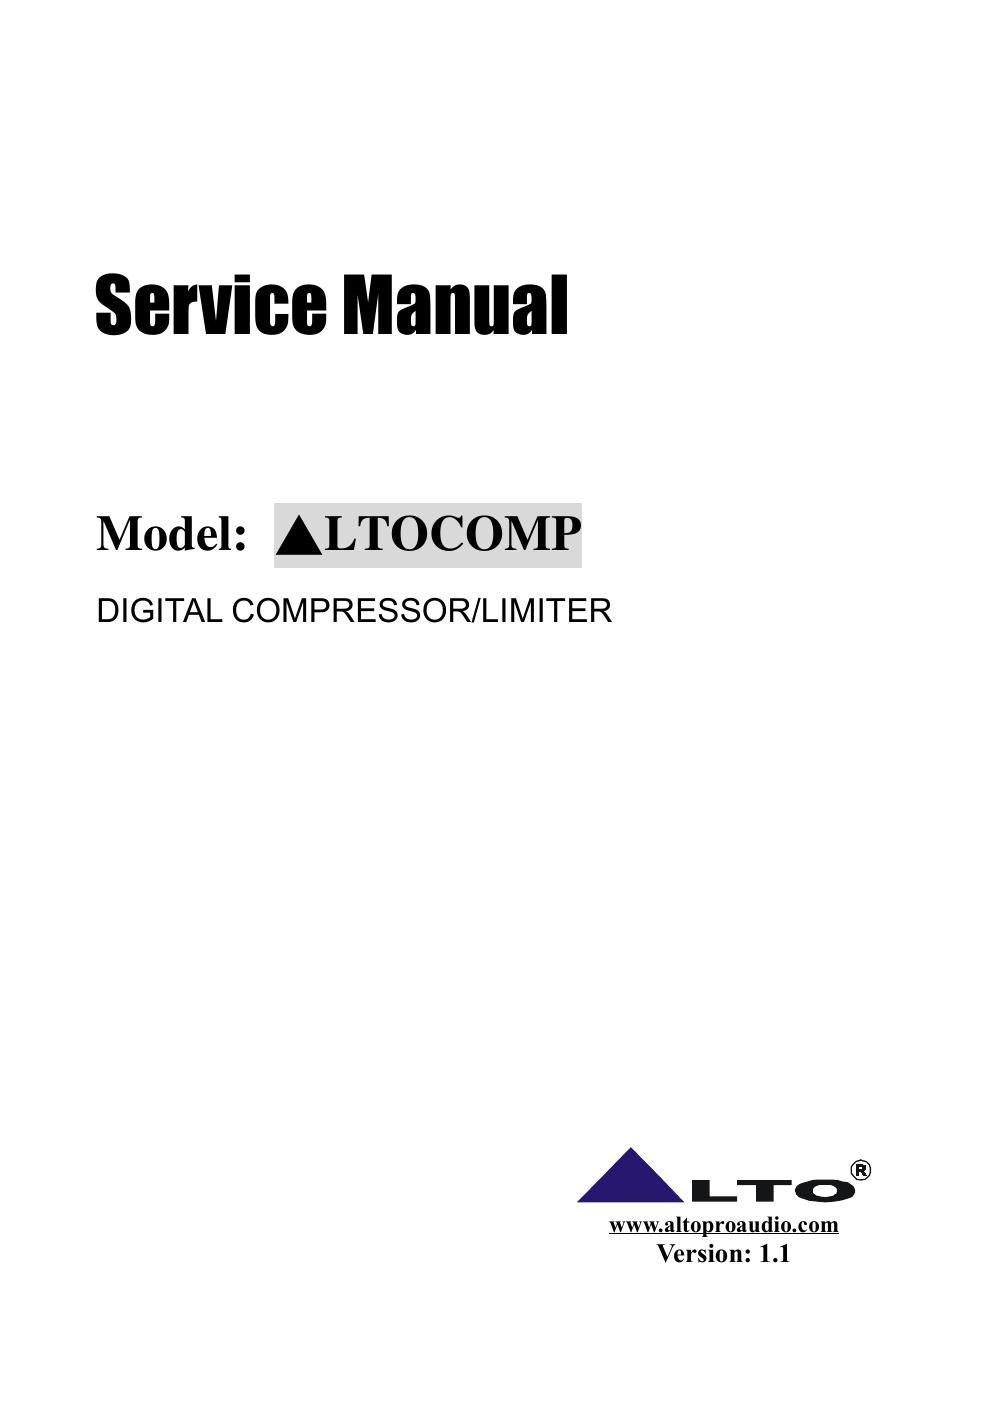 alto comp service manual